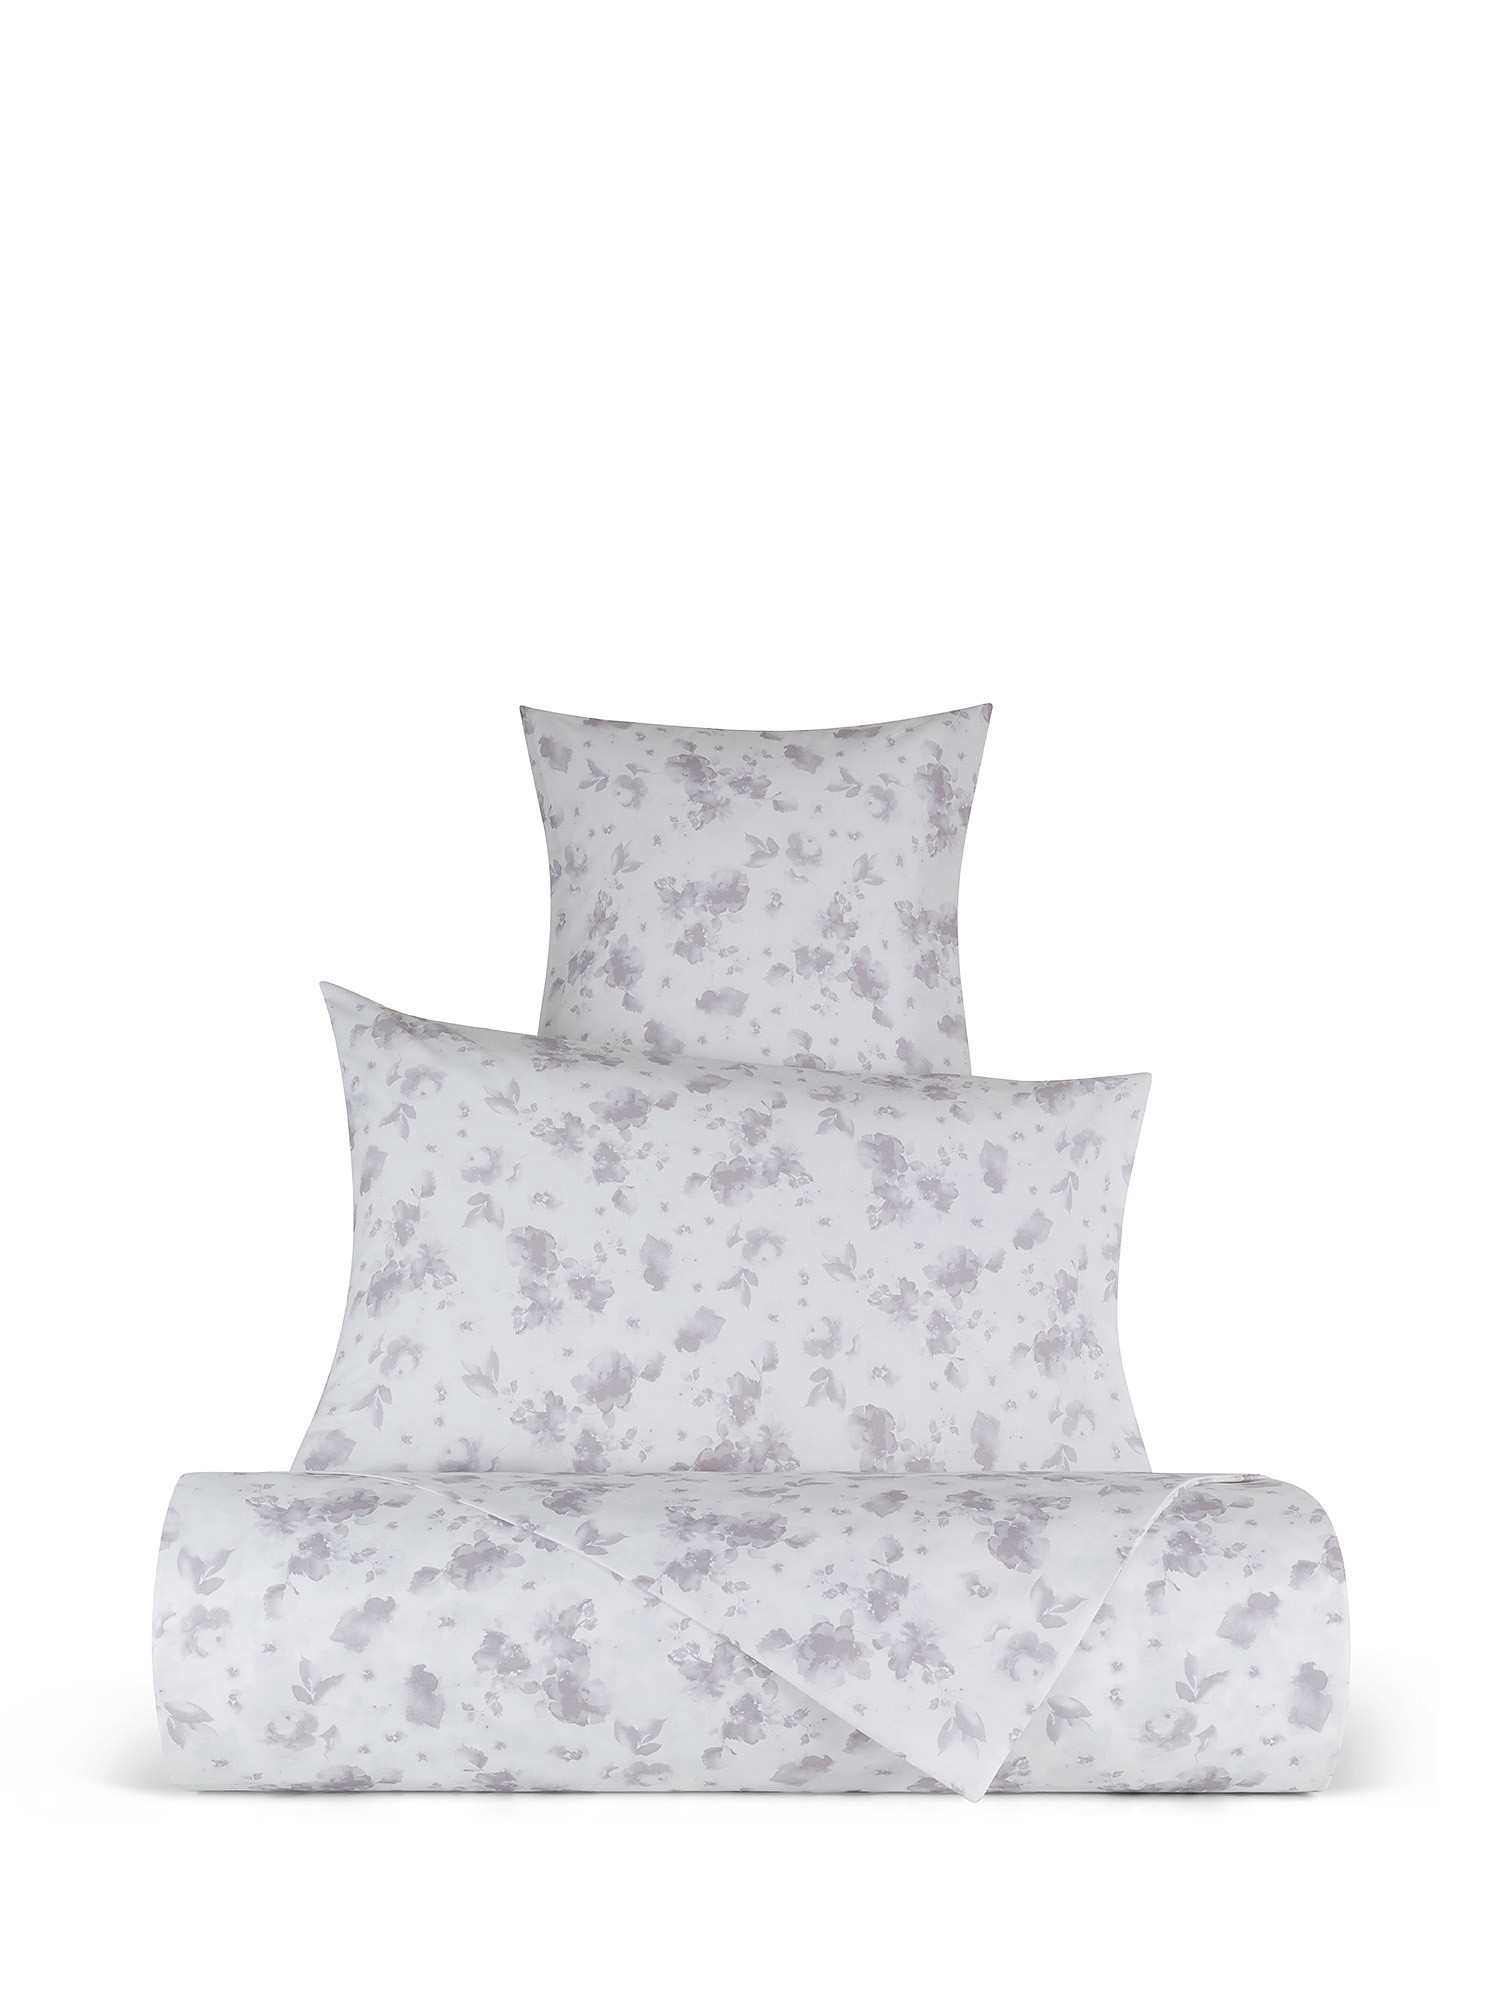 Lenzuolo liscio cotone percalle motivo floreale Portofino, Bianco, large image number 0